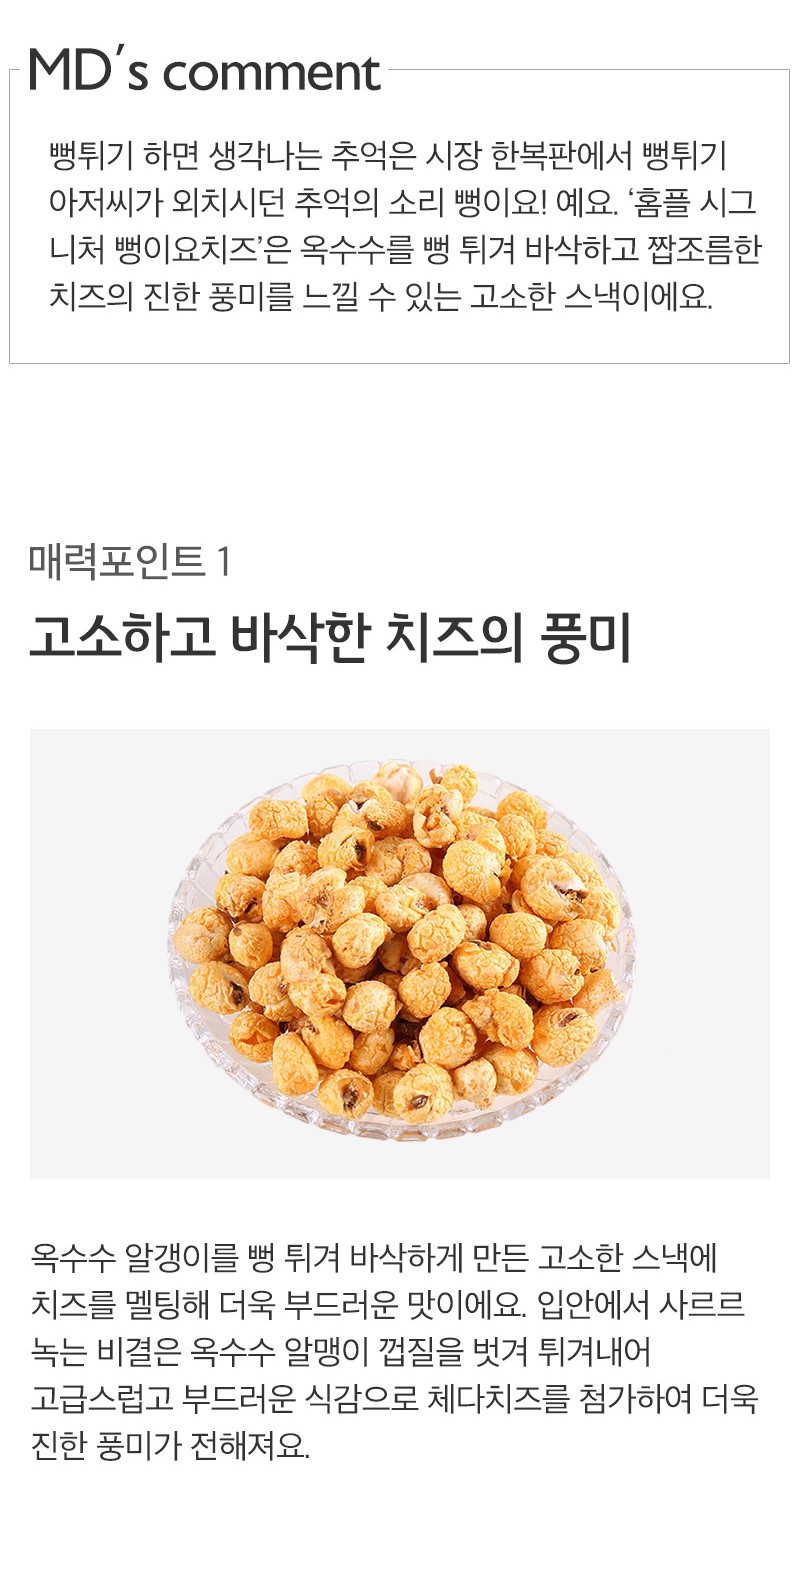 韓國食品-[Homeplus] Ppunglyo [Cheese] 240g